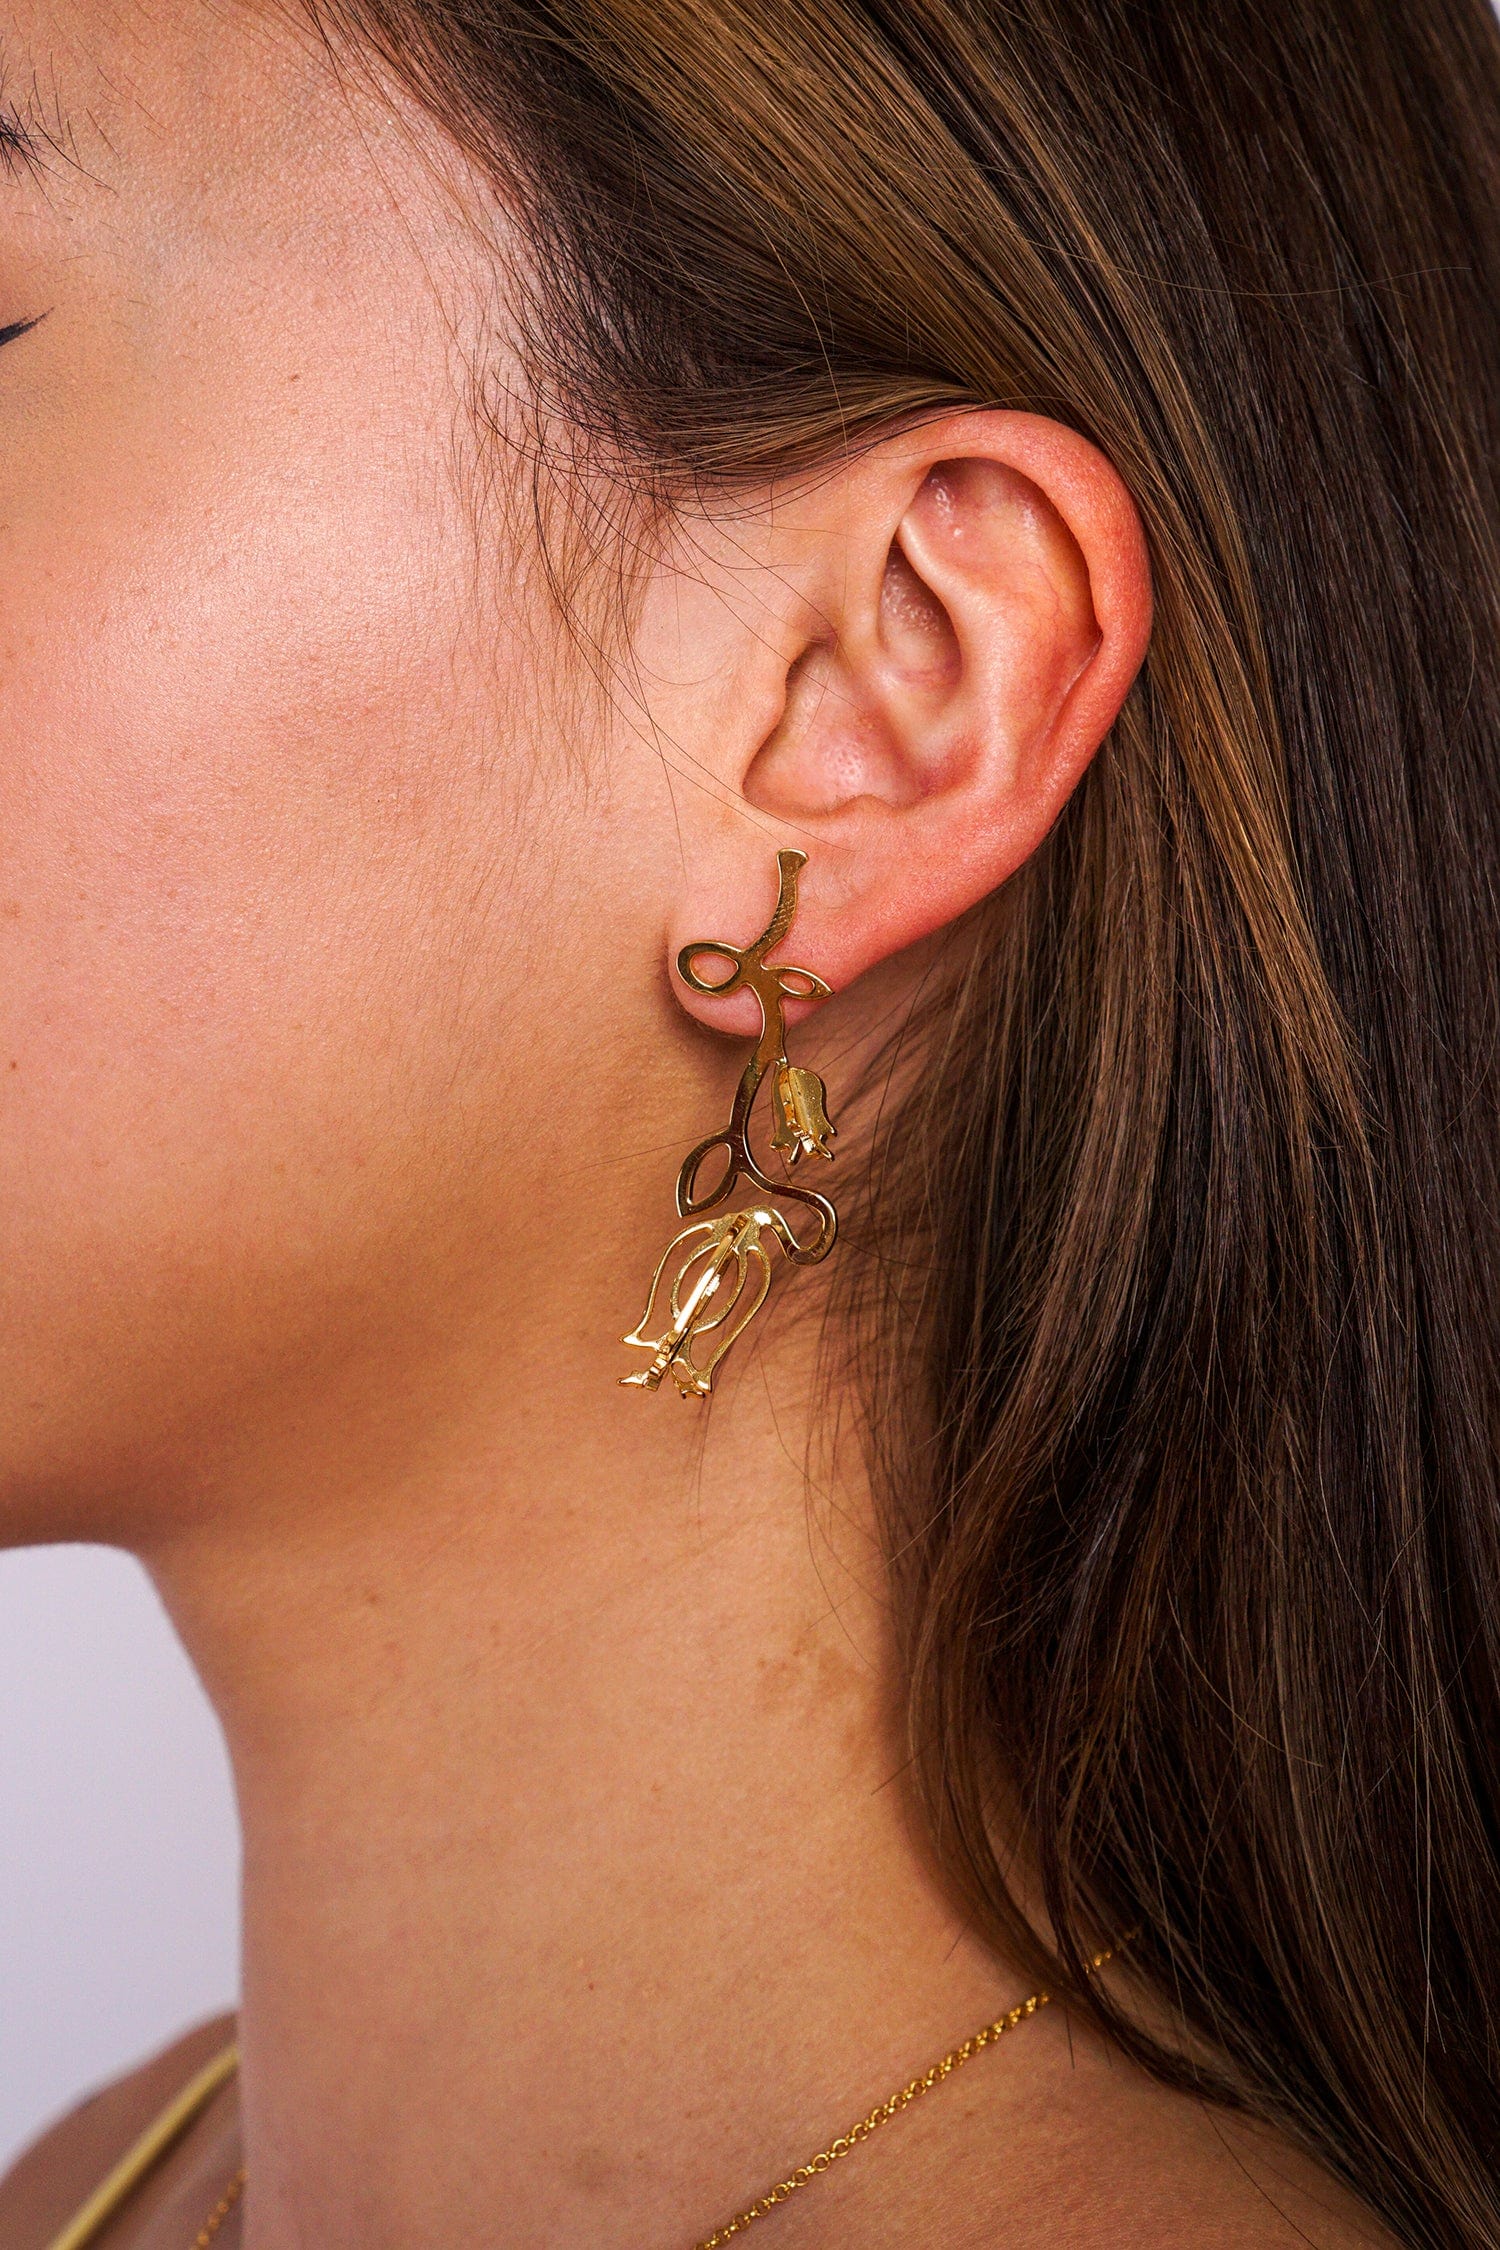 DCD EARRINGS Flower Earring In Bronze And Brass Gold Plated